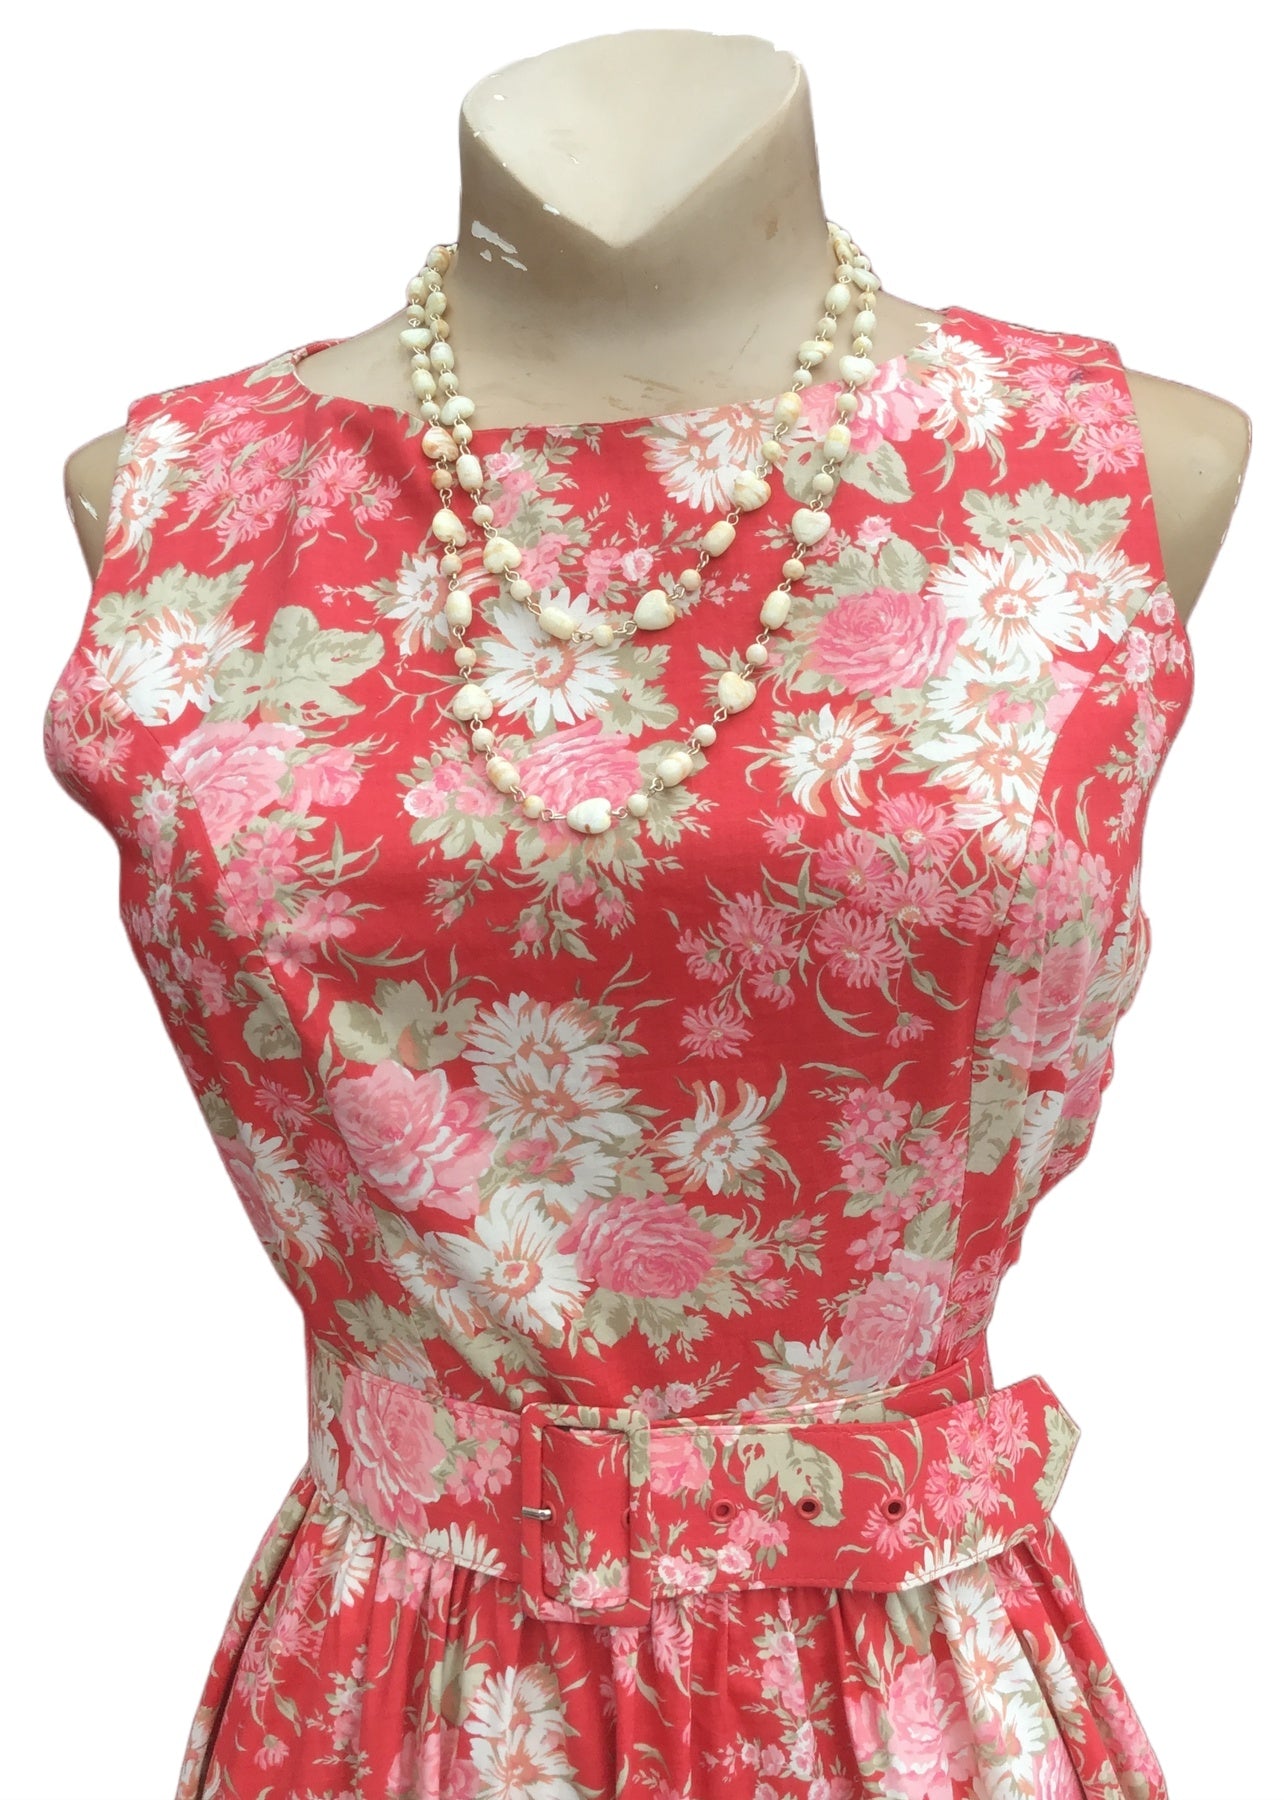 Vintage 80s Laura Ashley Pink Floral Sleeveless Dress with Belt • Summer Dress